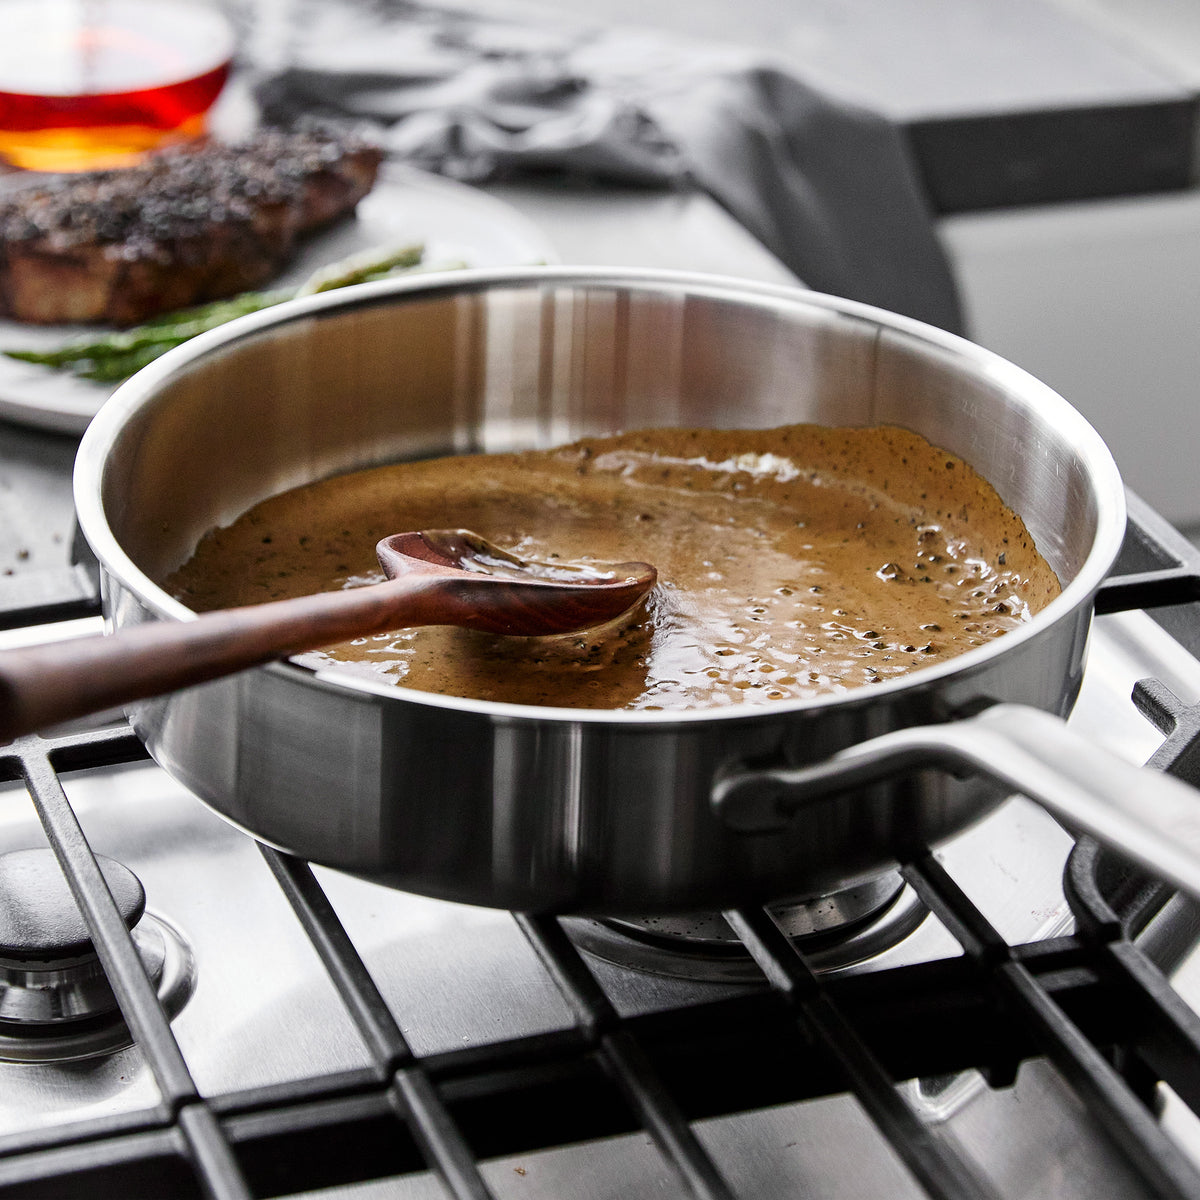 Merten and Storck, Stainless Steel 14-Piece Cookware Set